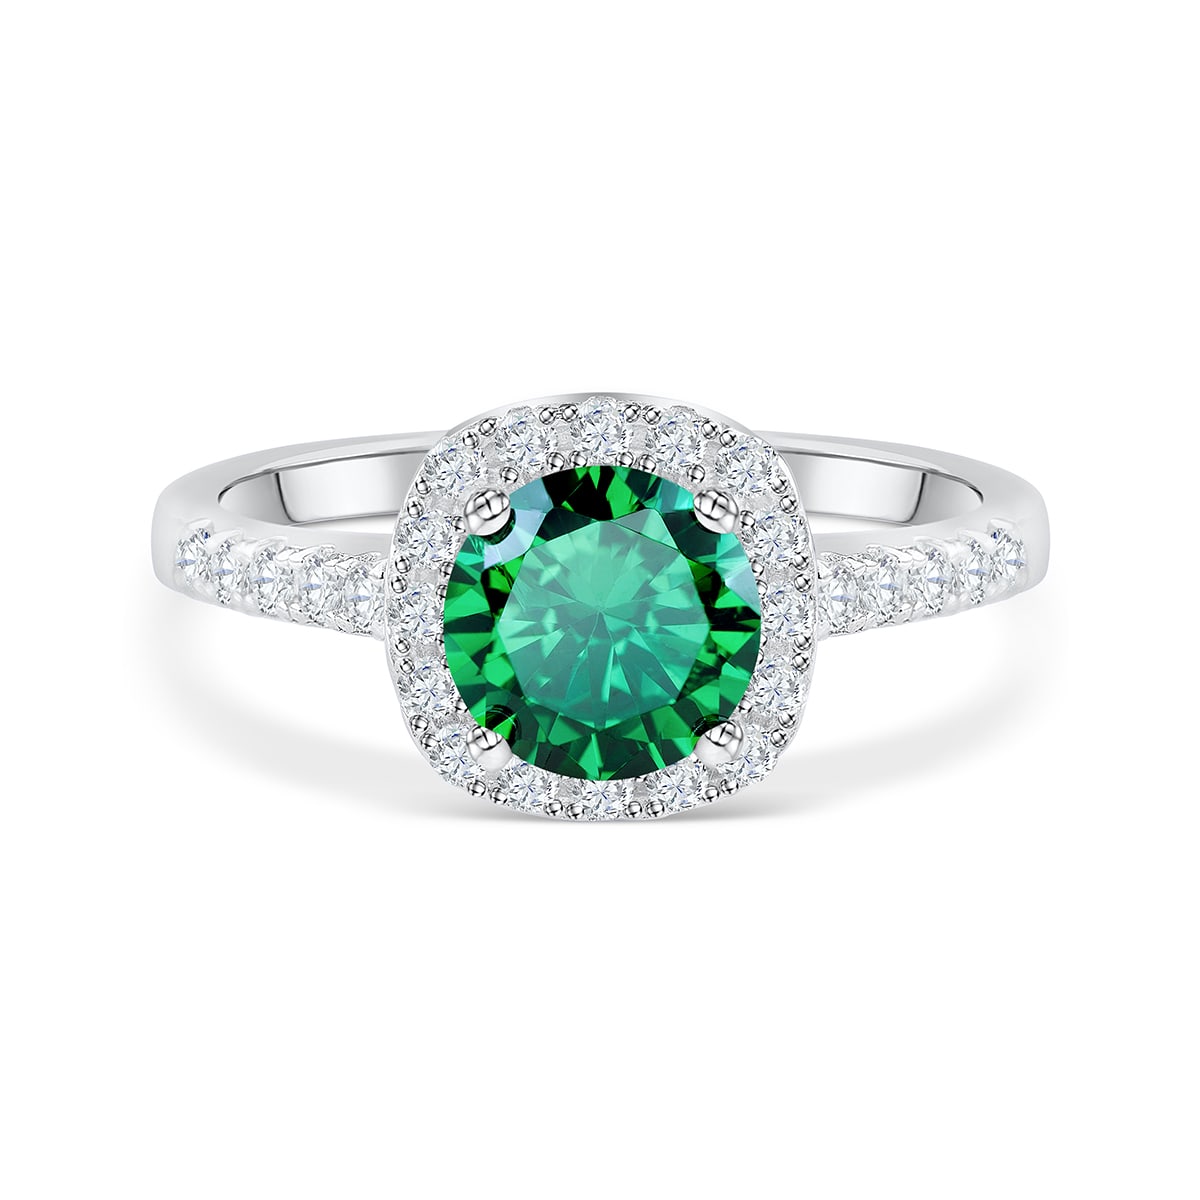 halo wedding band with emerald stone